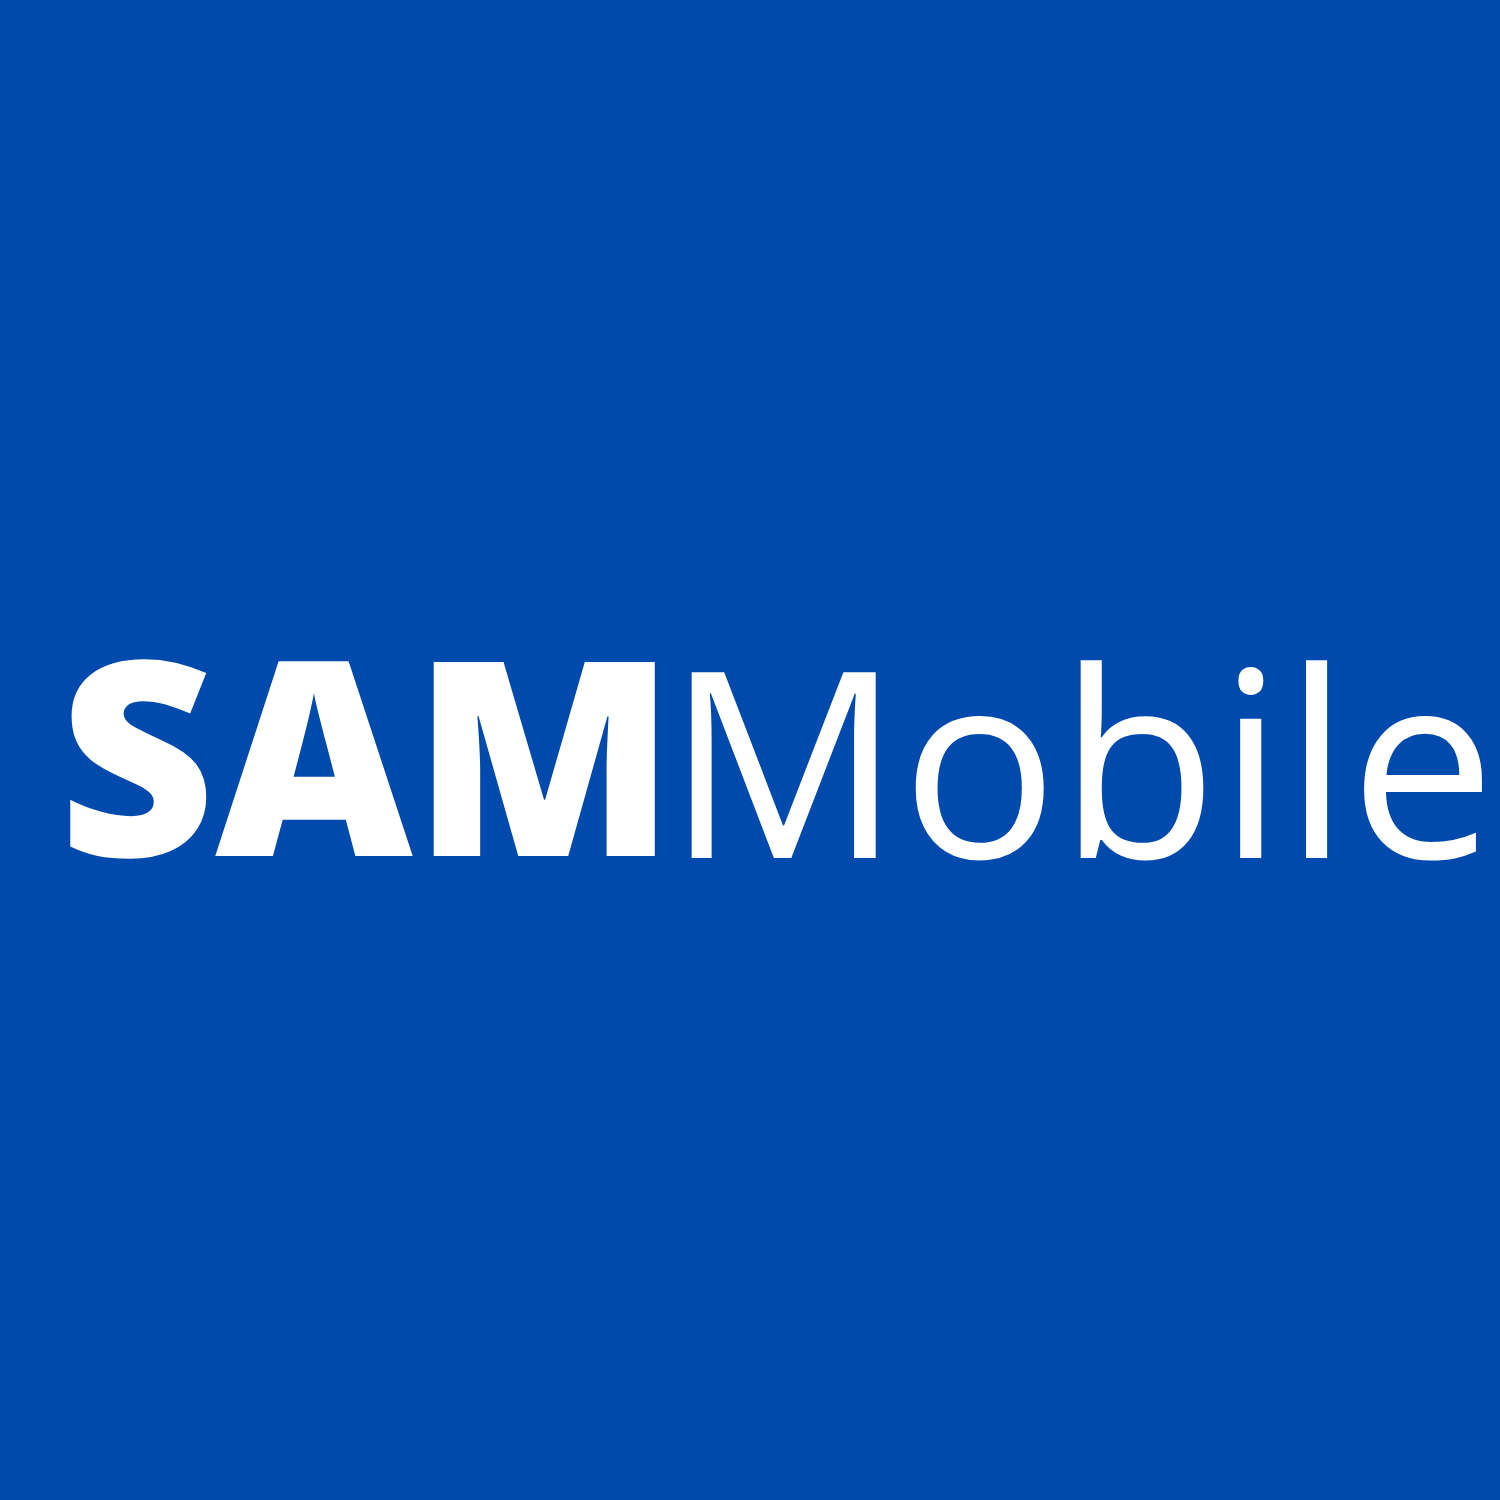 SamMobile.com - Crunchbase Company Profile & Funding